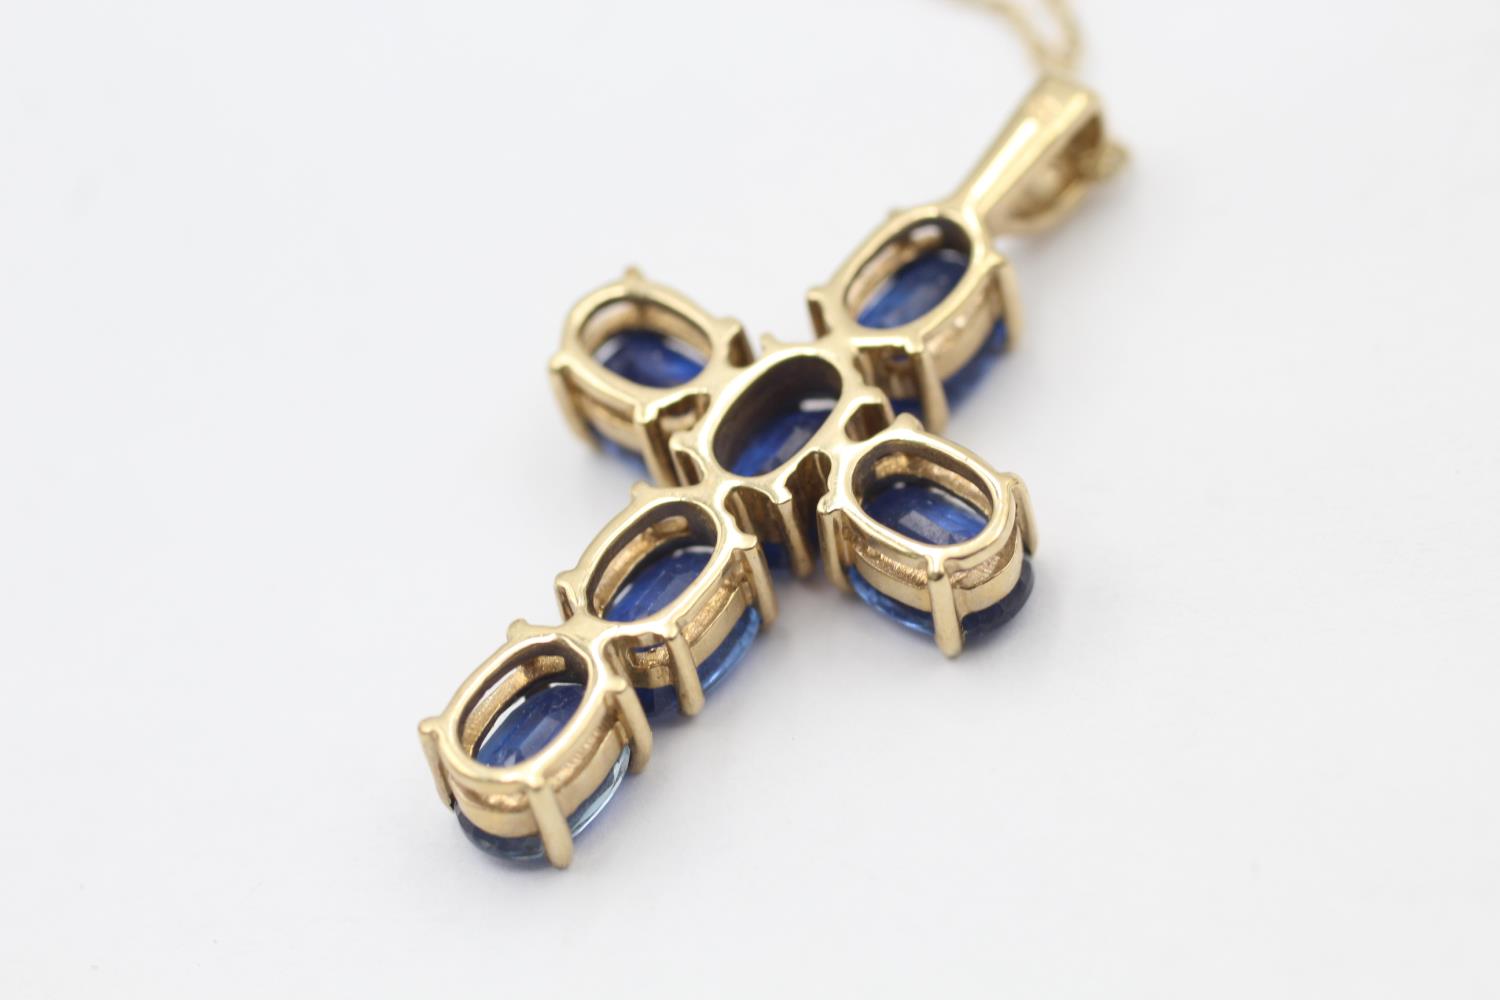 9ct gold kyanite set cross pendant necklace (5.1g) - Image 2 of 4